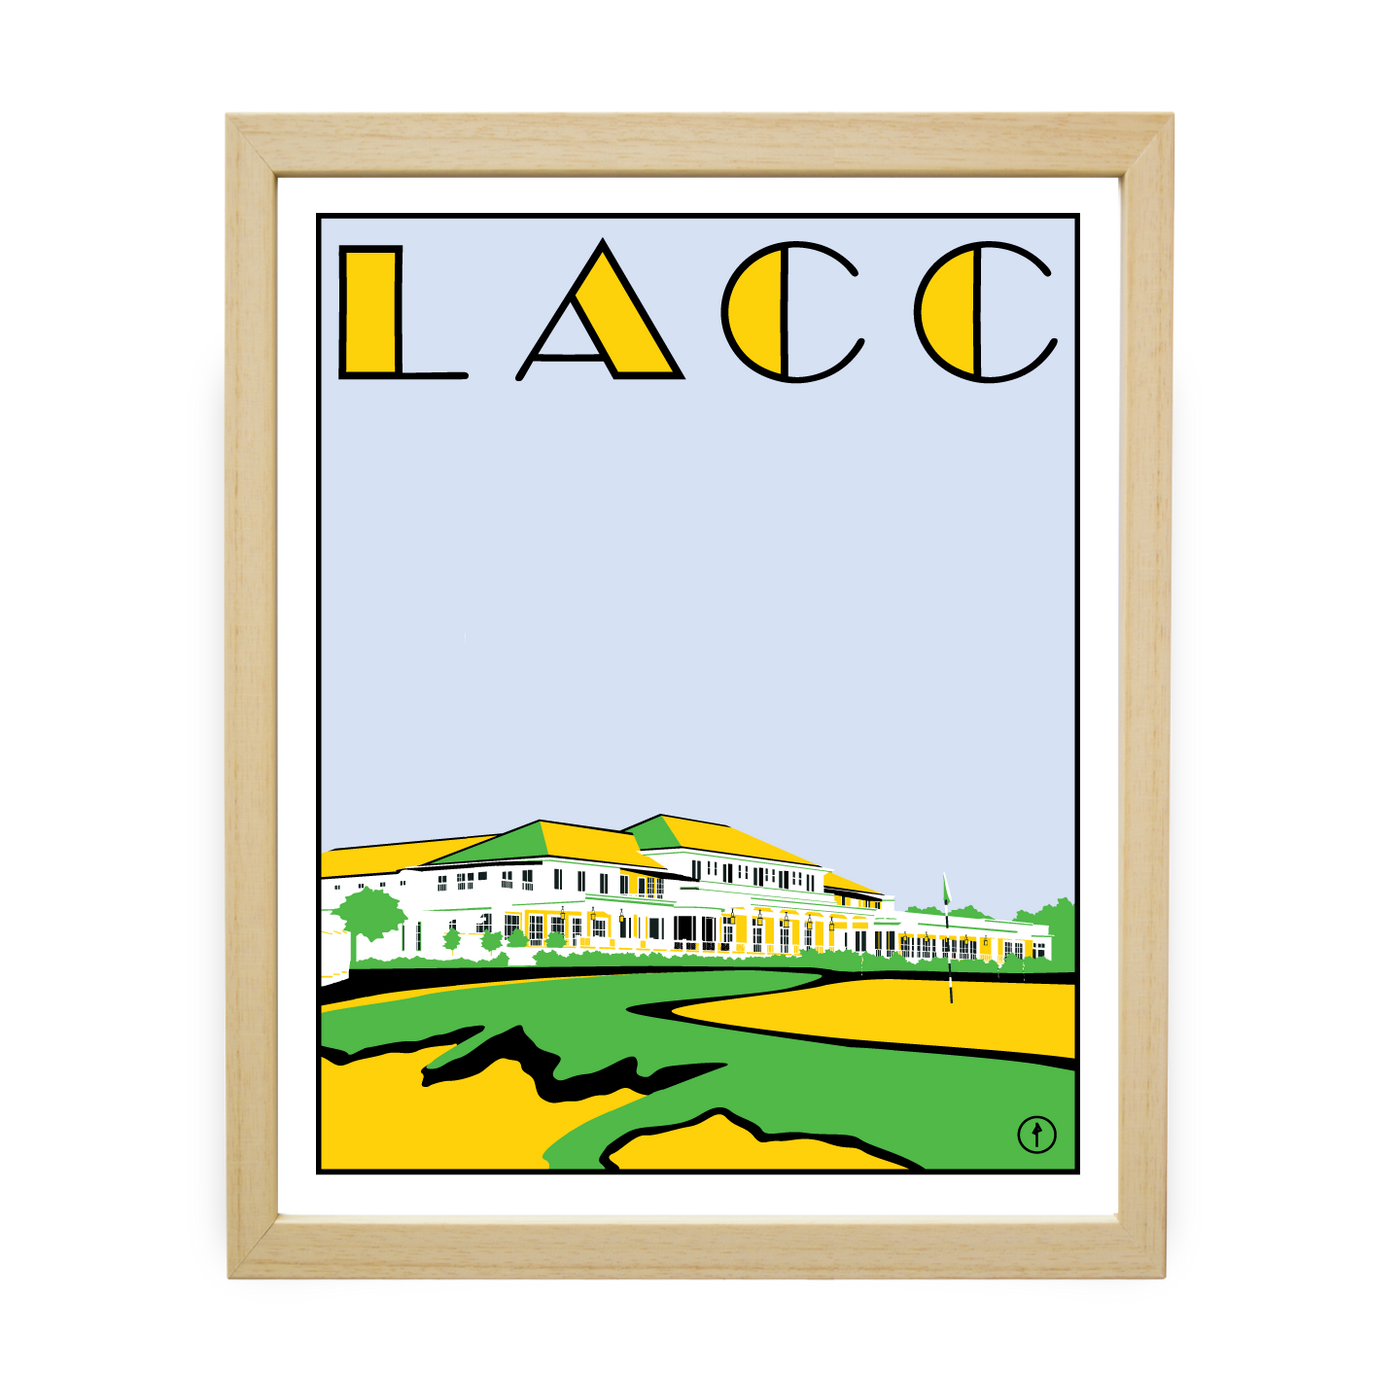 LACC (Minimal Illustration - Green/Yellow)